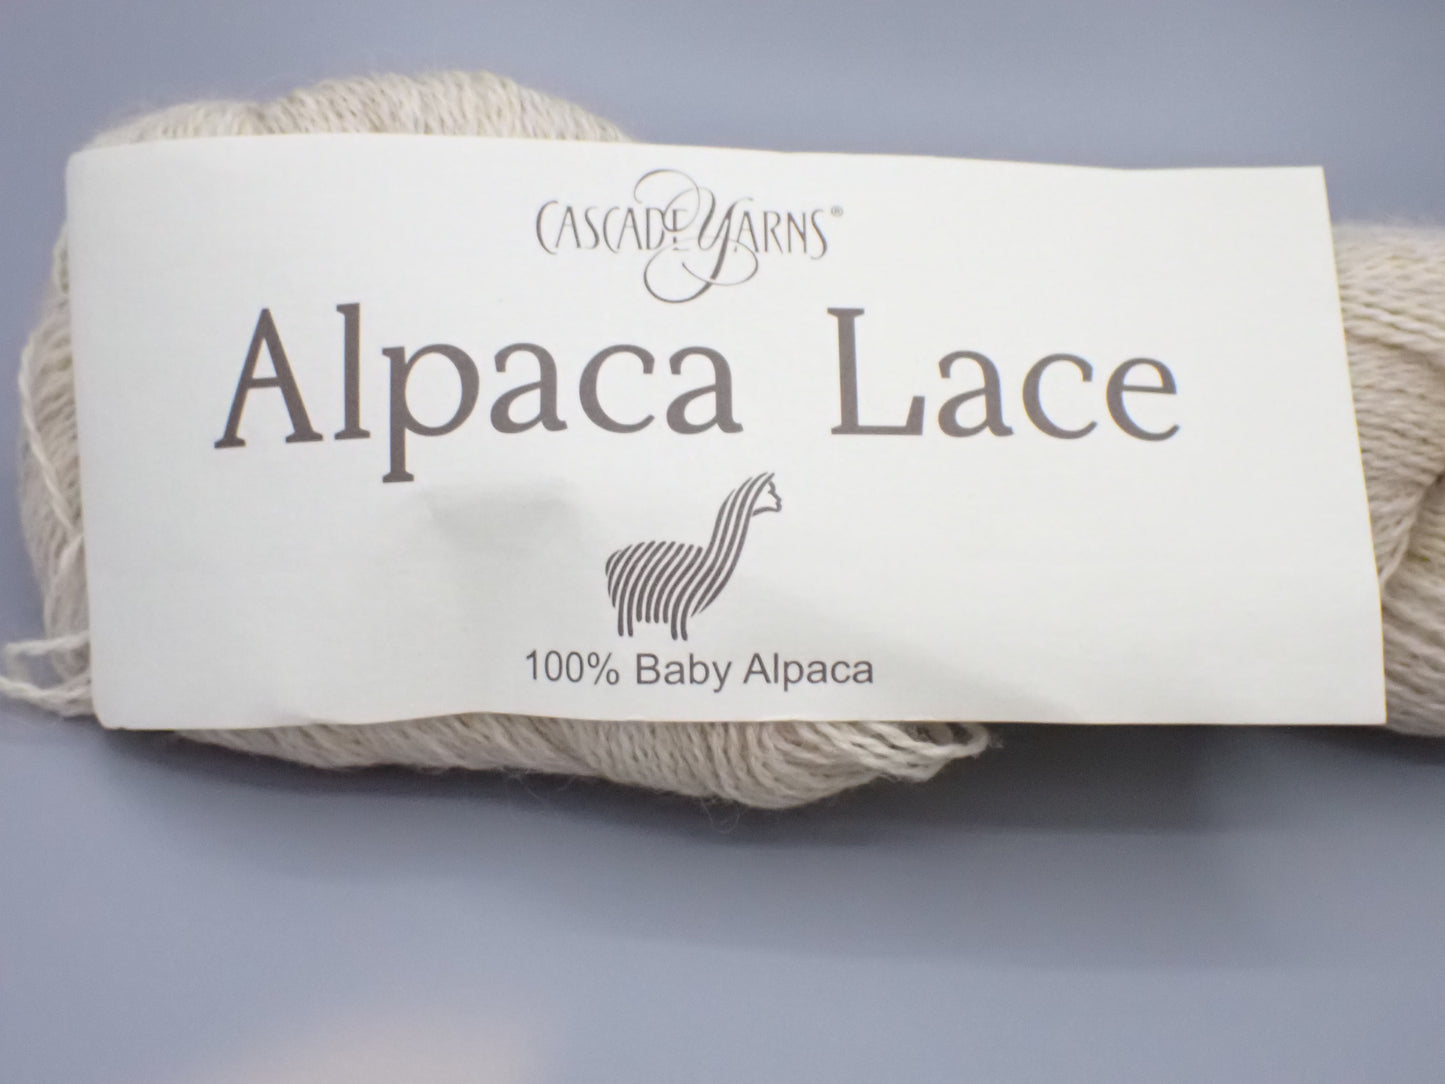 Cascade Yarns Alpaca Lace, Lace weight Very Light Tan